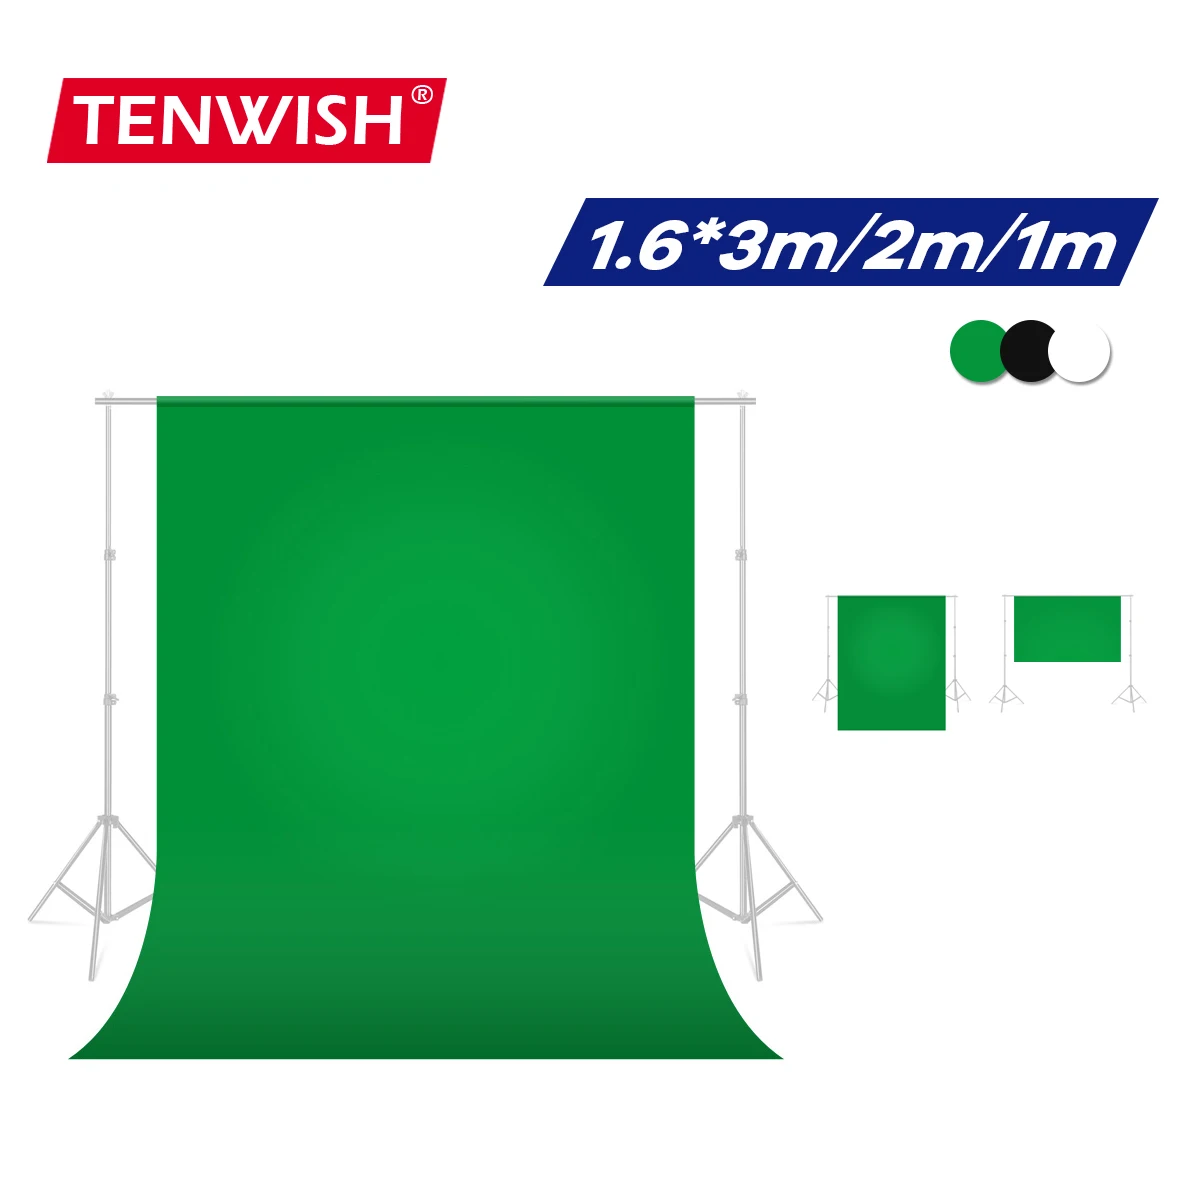 TENWISH 1.6x1m/2m/3m Chroma Key Backdrop Green Screen for Photo Studio Background Non Woven Fabrics